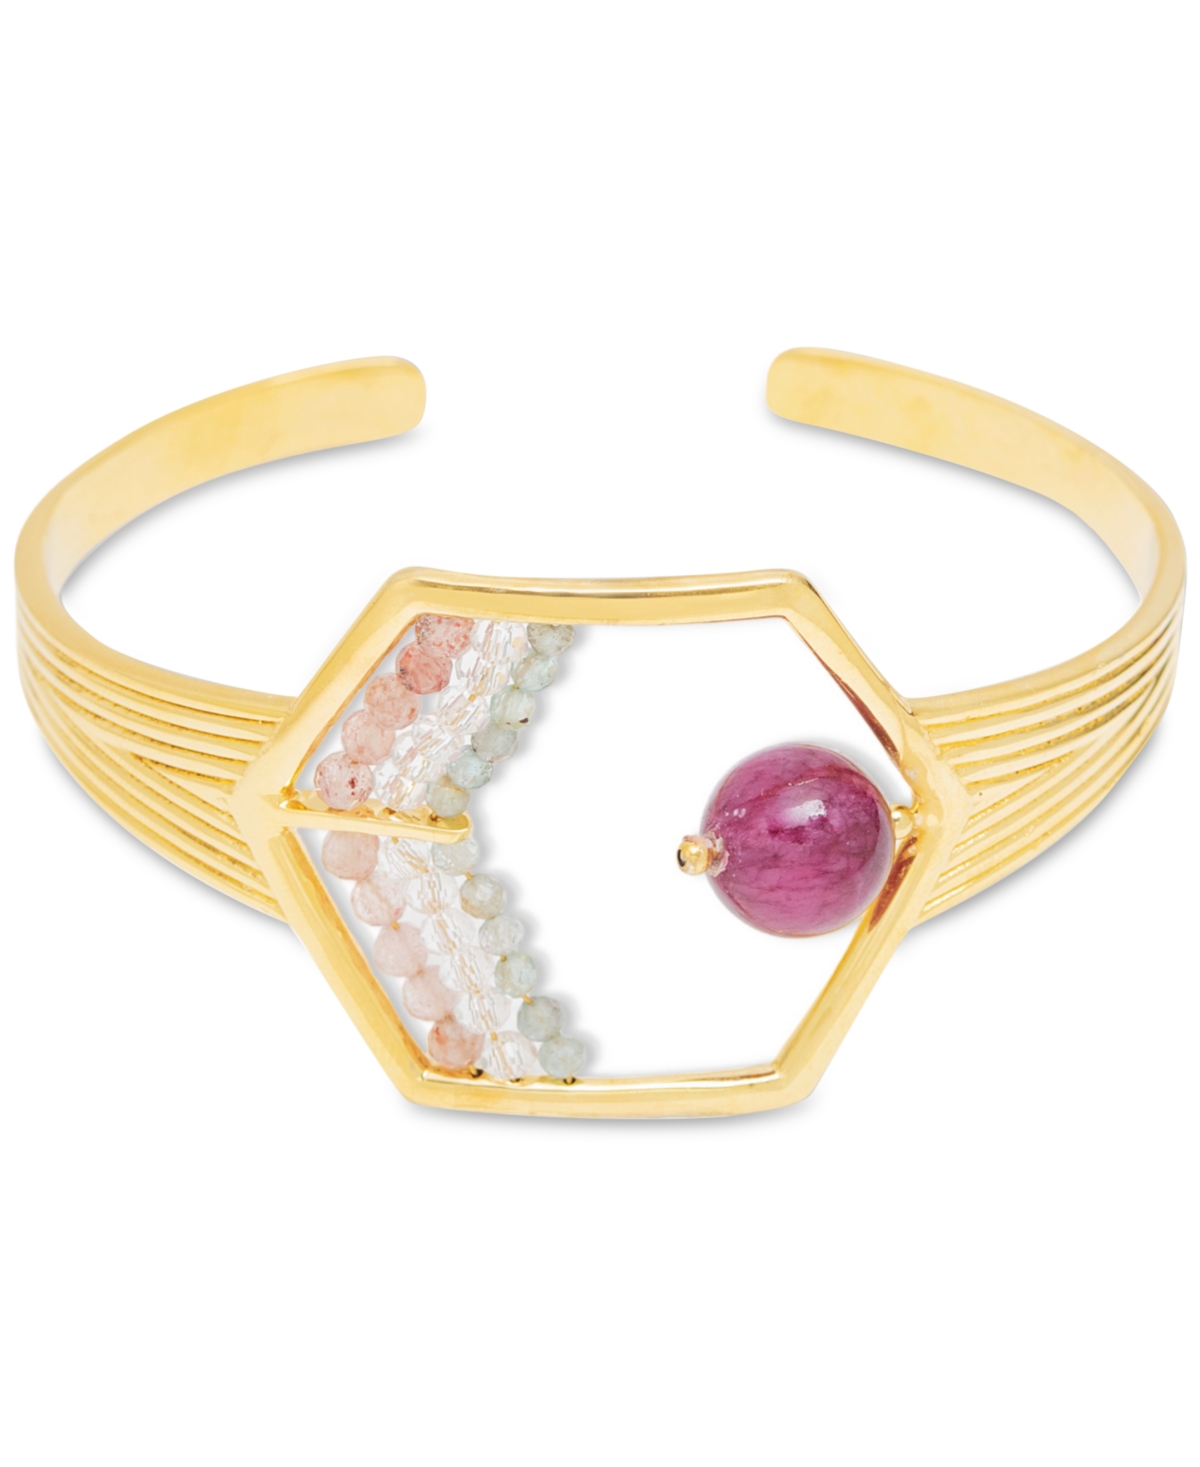 18k Gold-Plated Mixed Gemstone Cuff Bracelet - Gld